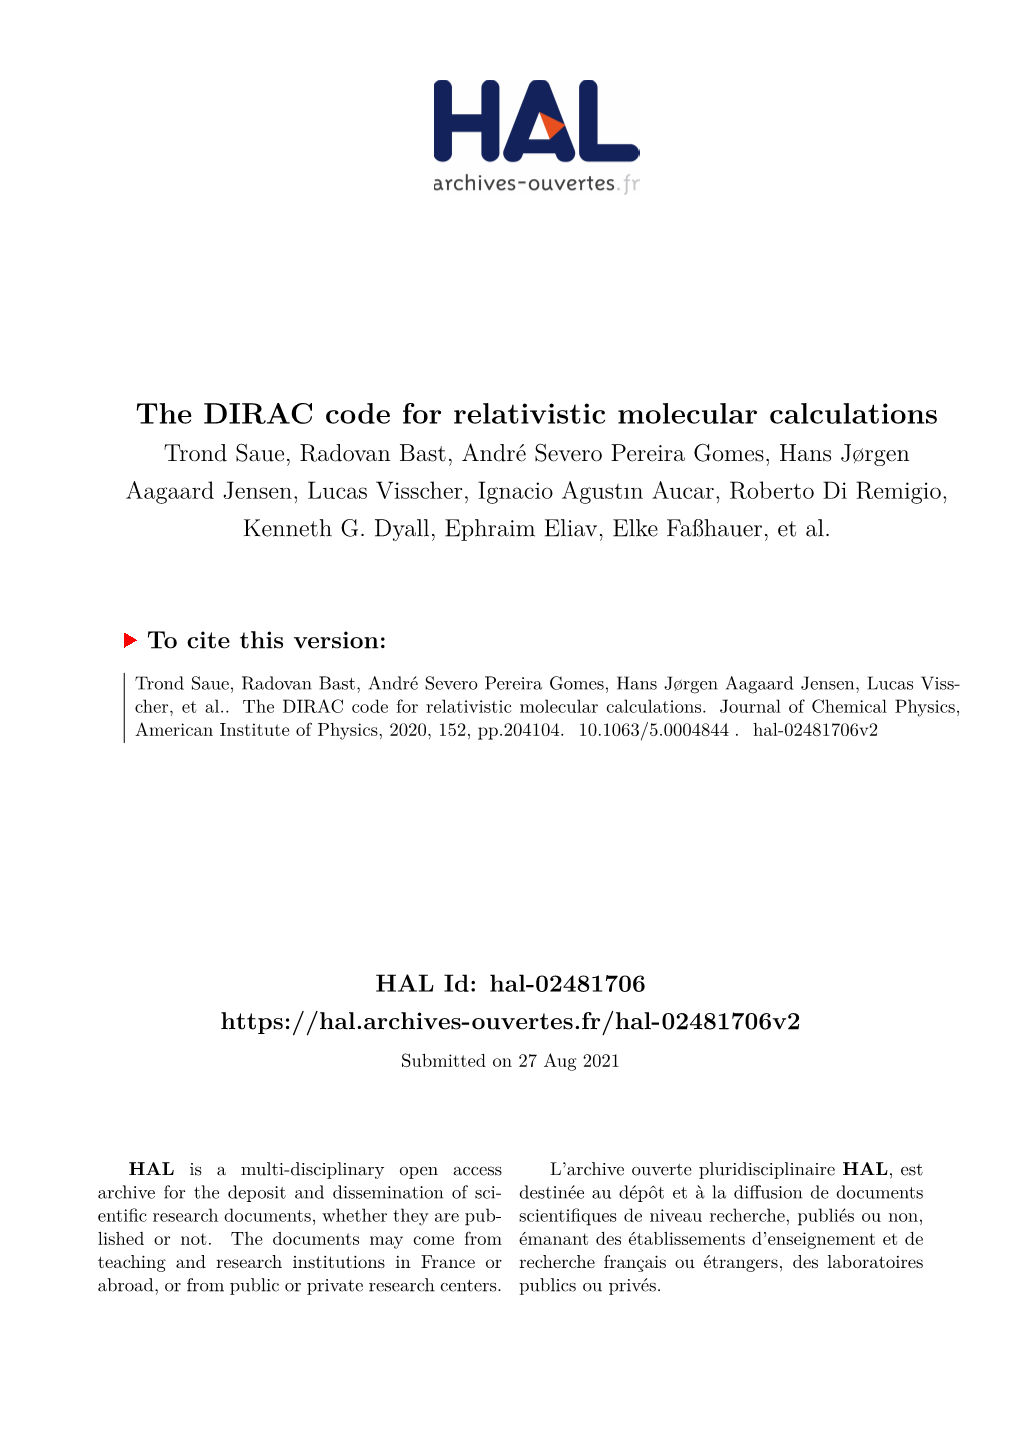 The DIRAC Code for Relativistic Molecular Calculations